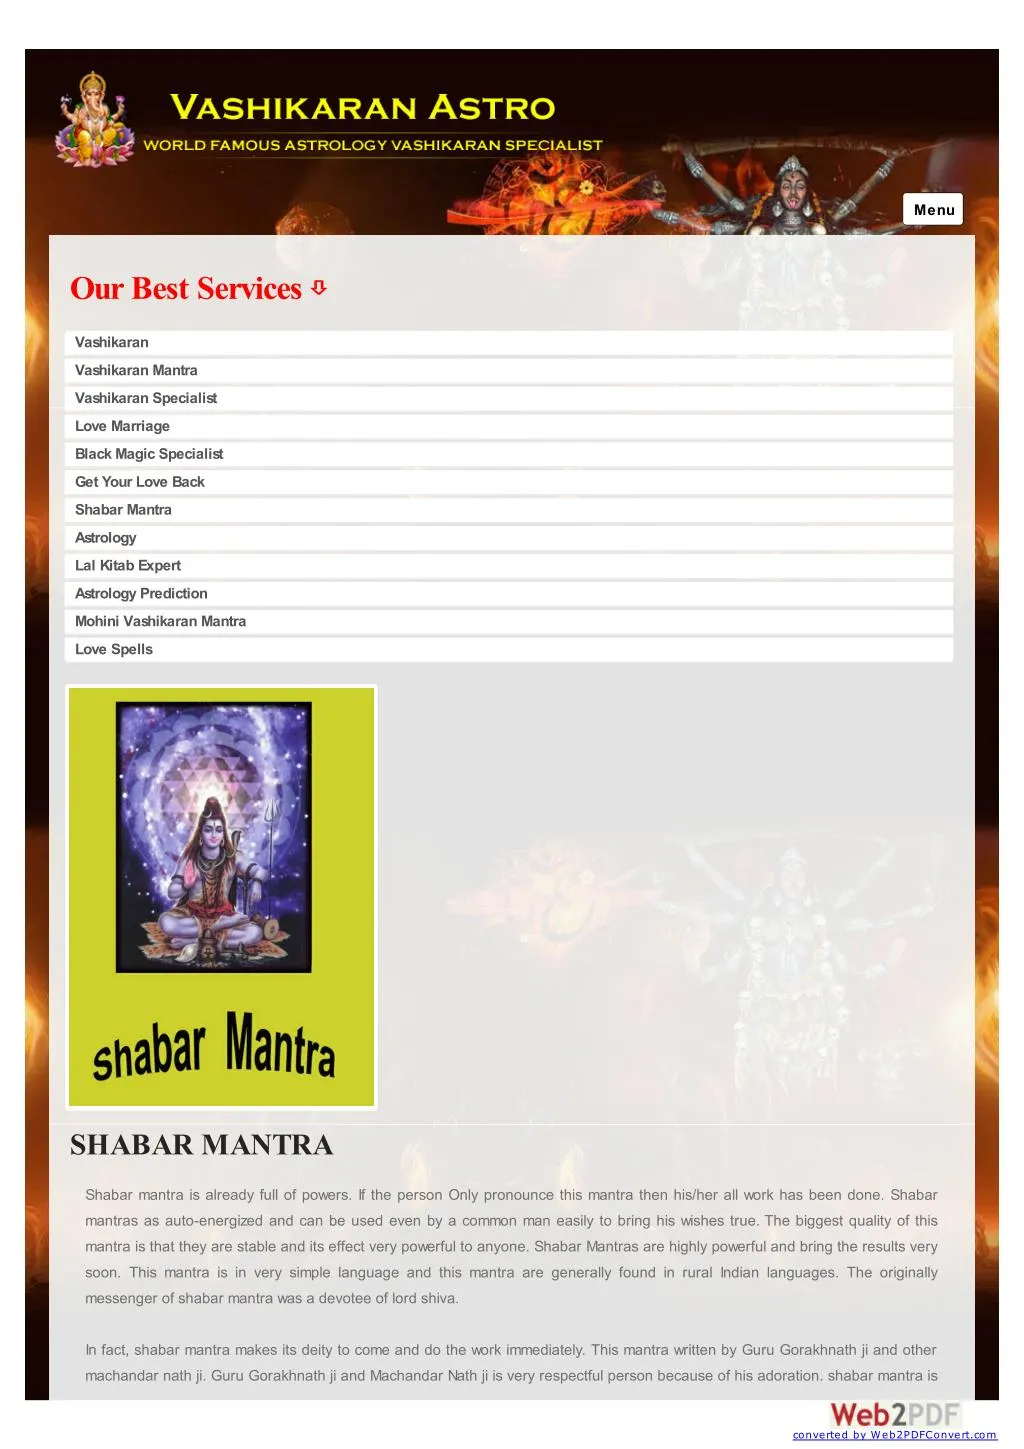 shabar mantra free download